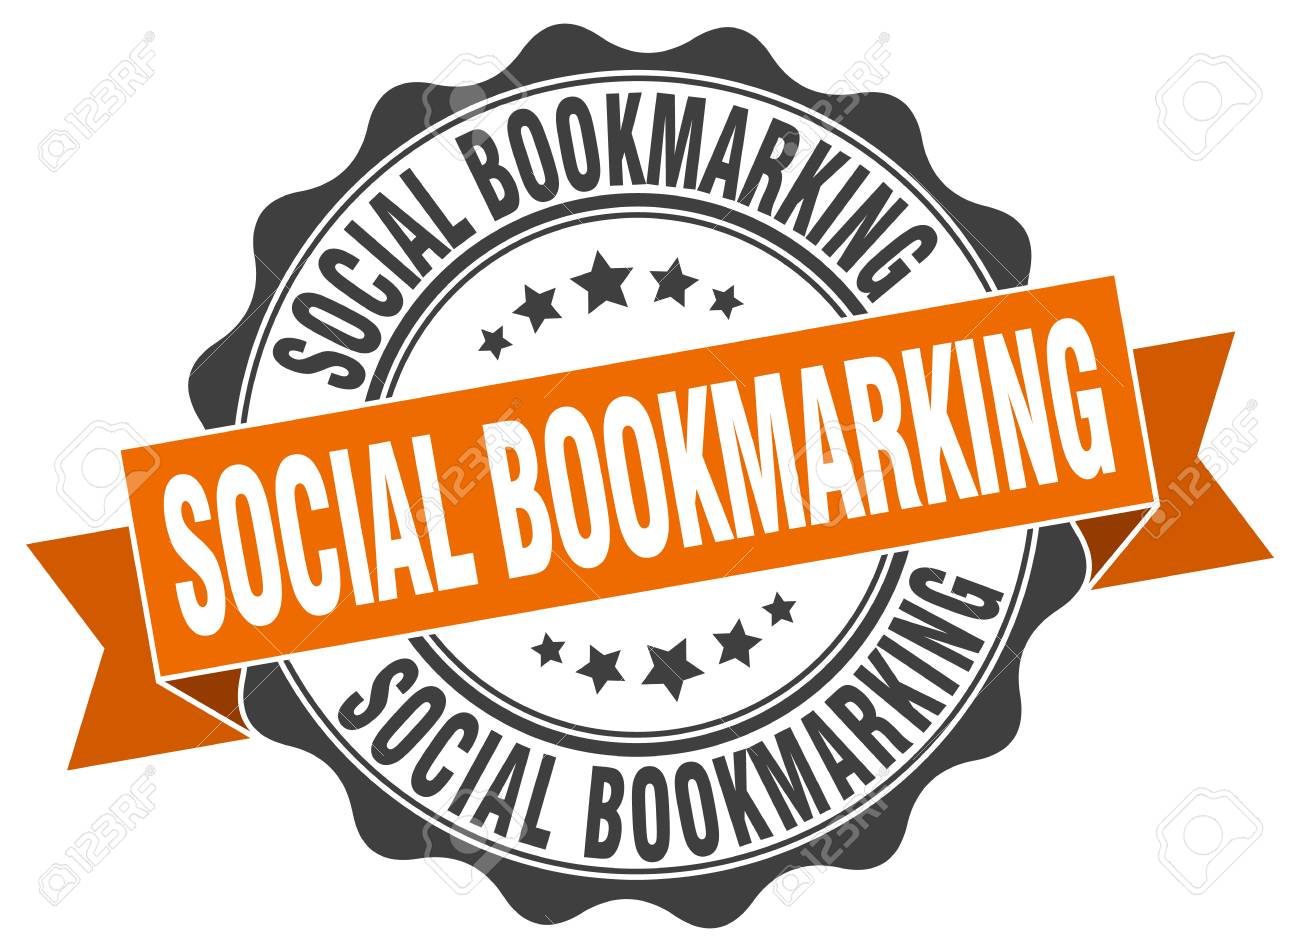 social bookmarking round grun